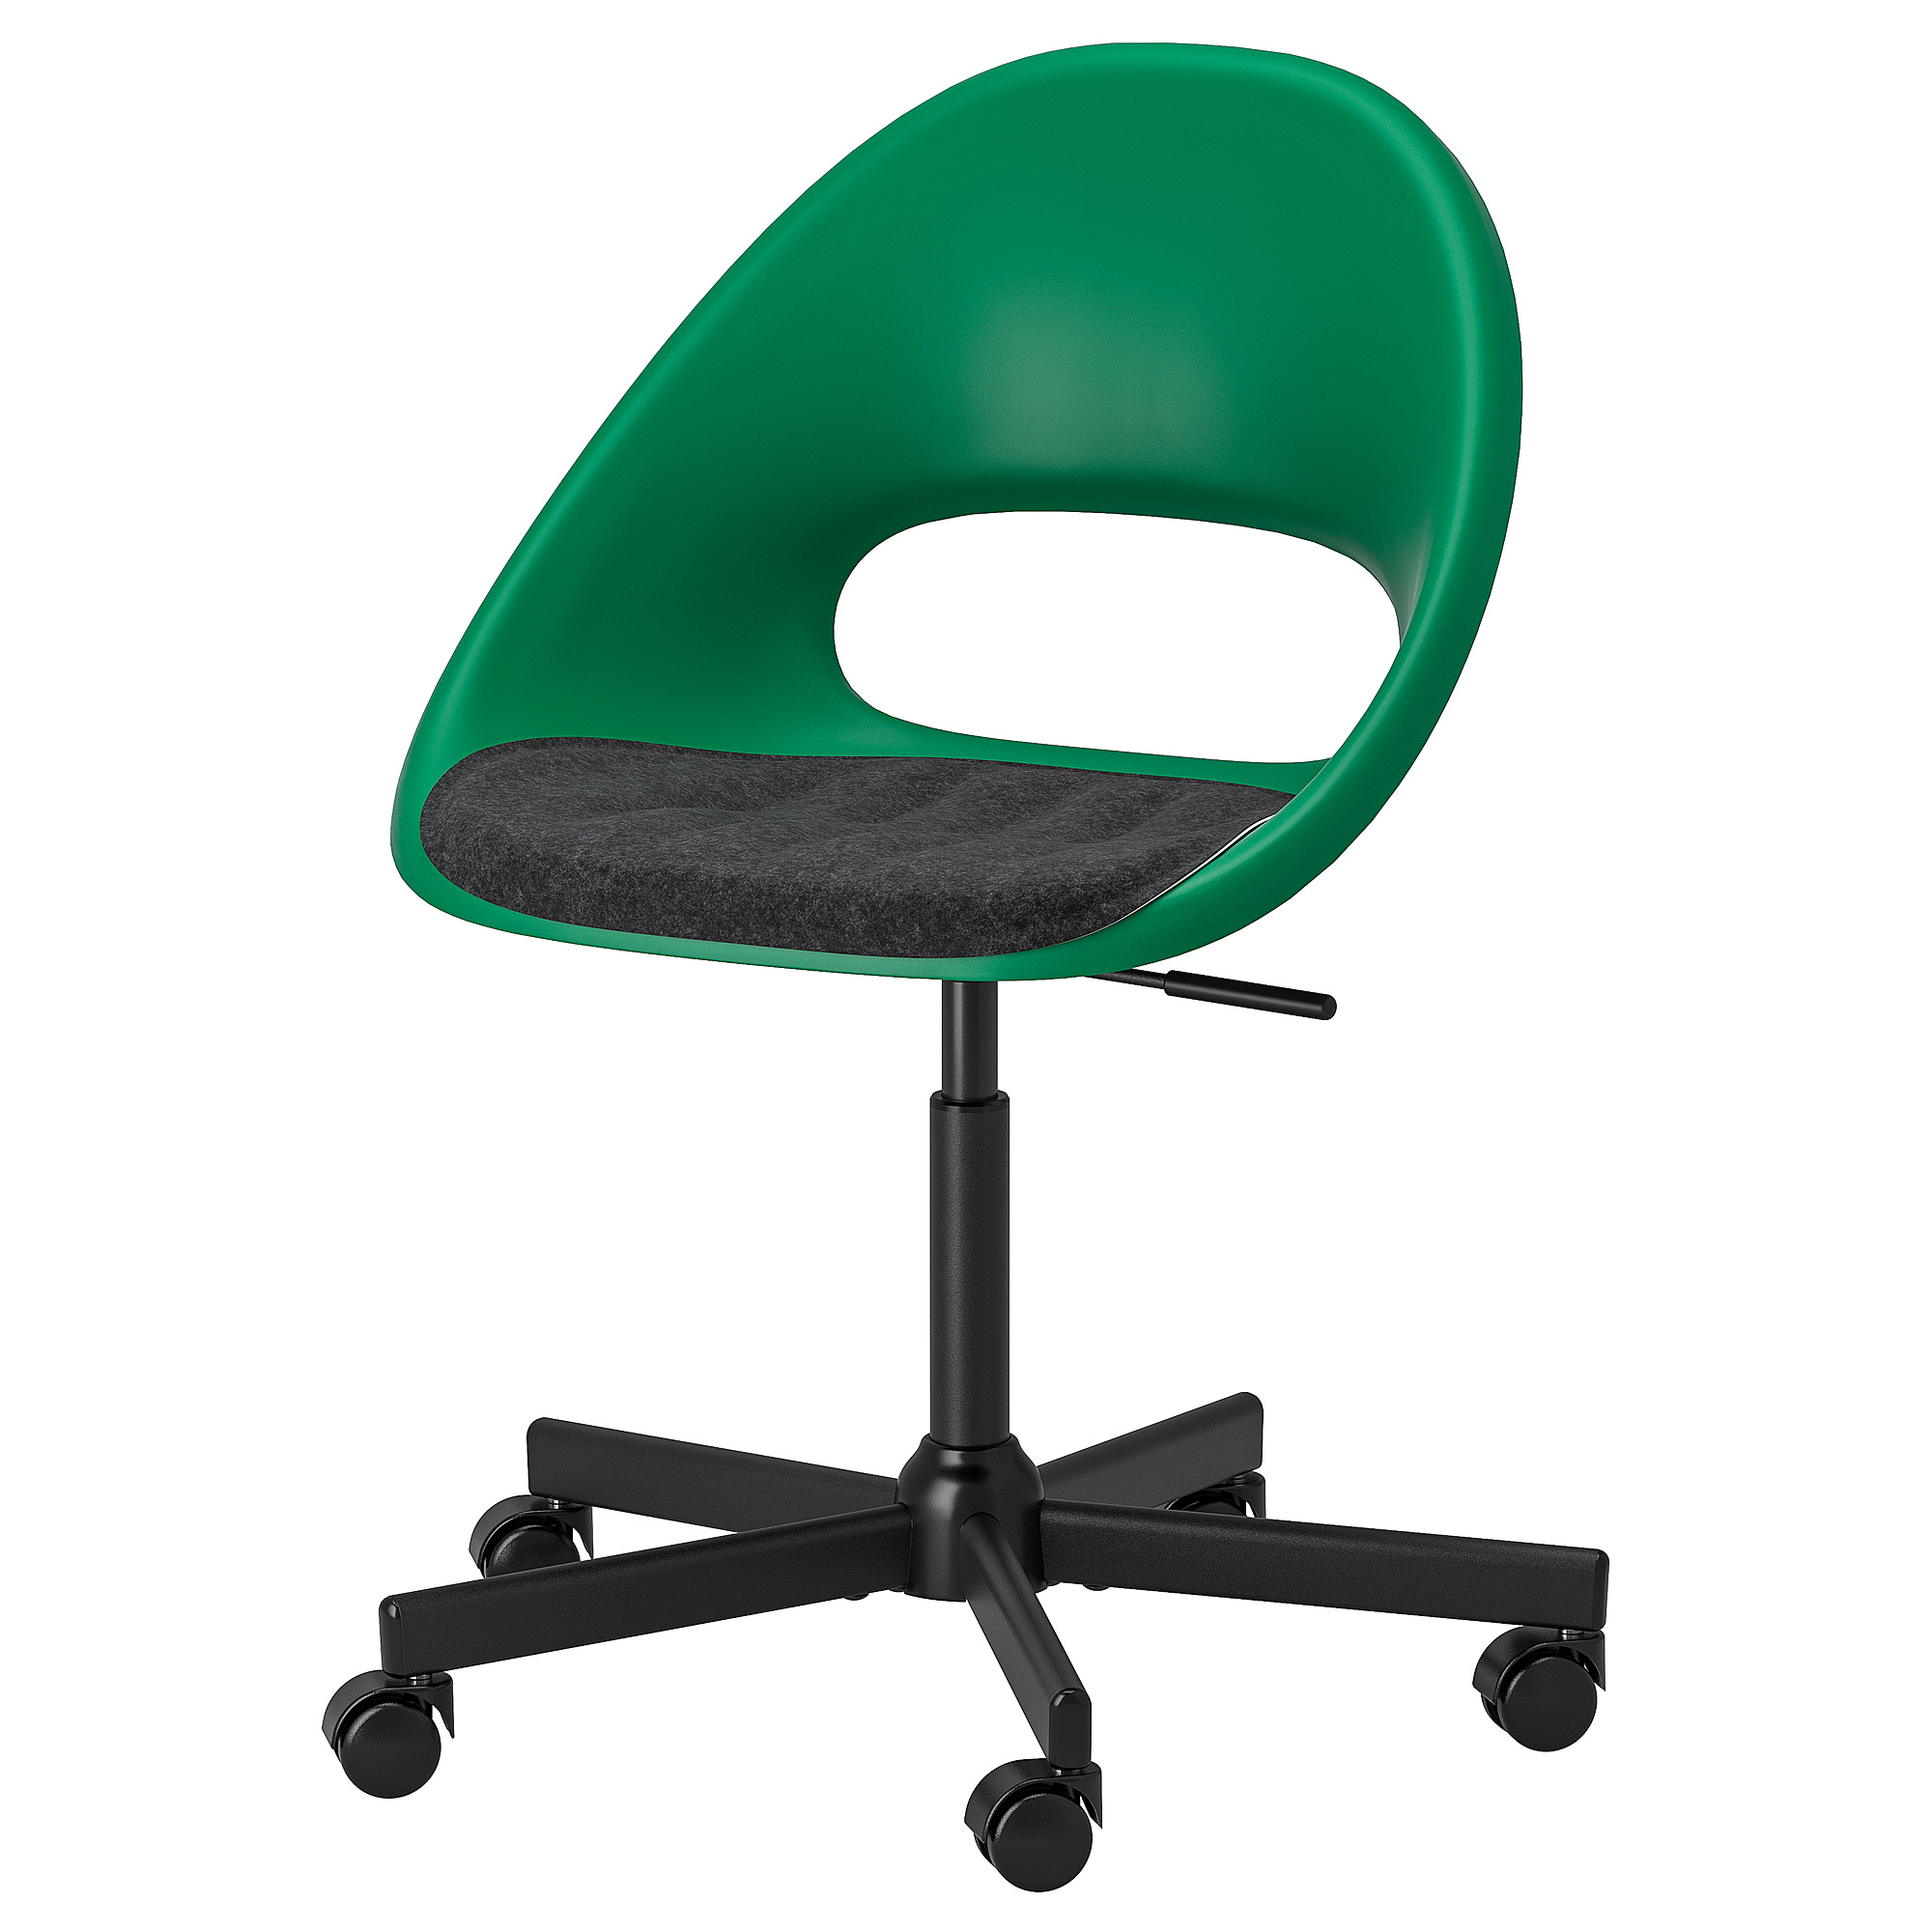 ELDBERGET/MALSKÄR swivel chair with pad